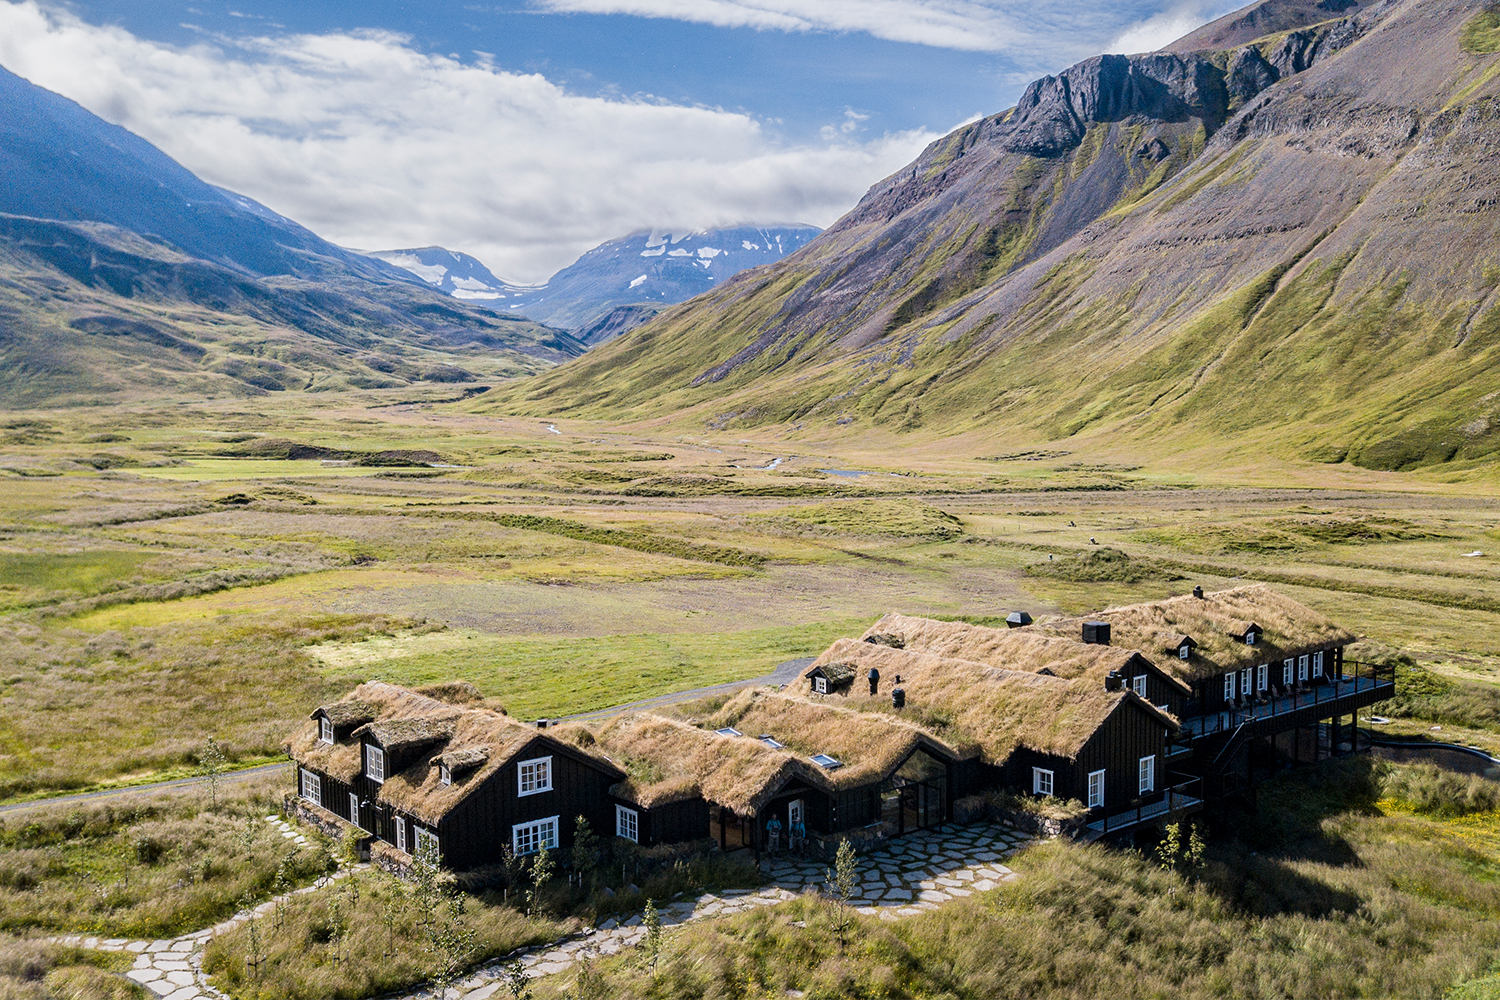 Deplar Farm, Iceland, a remote, luxury destination off the beaten path